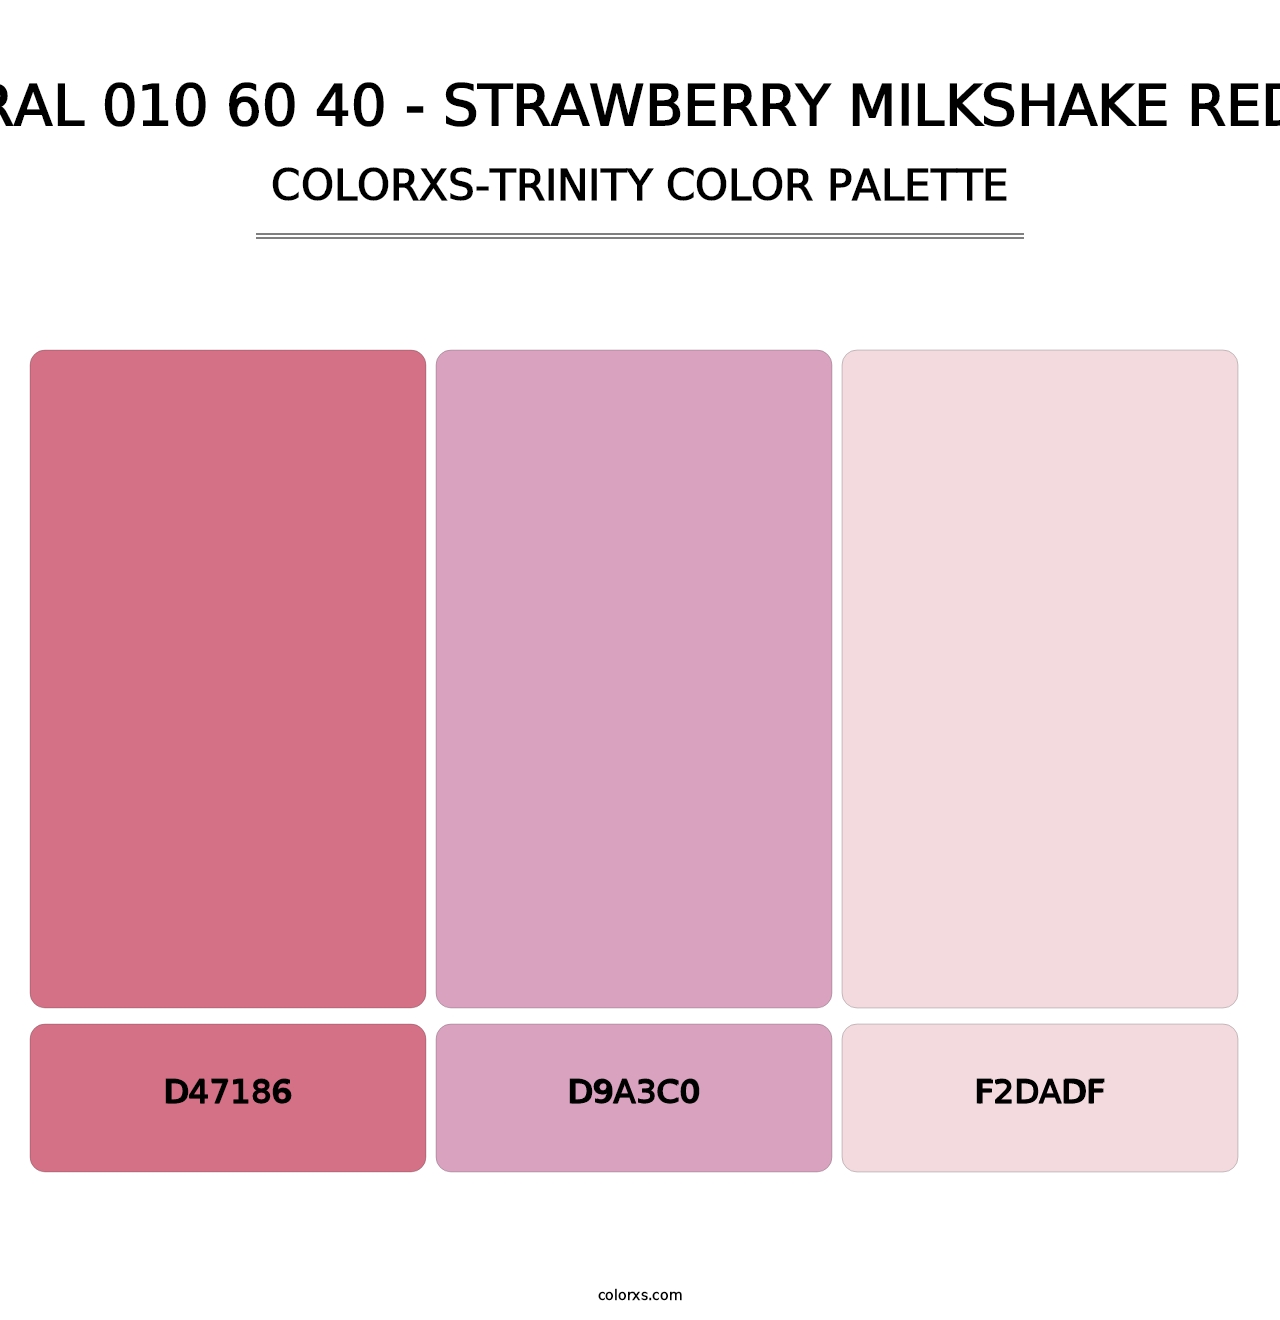 RAL 010 60 40 - Strawberry Milkshake Red - Colorxs Trinity Palette